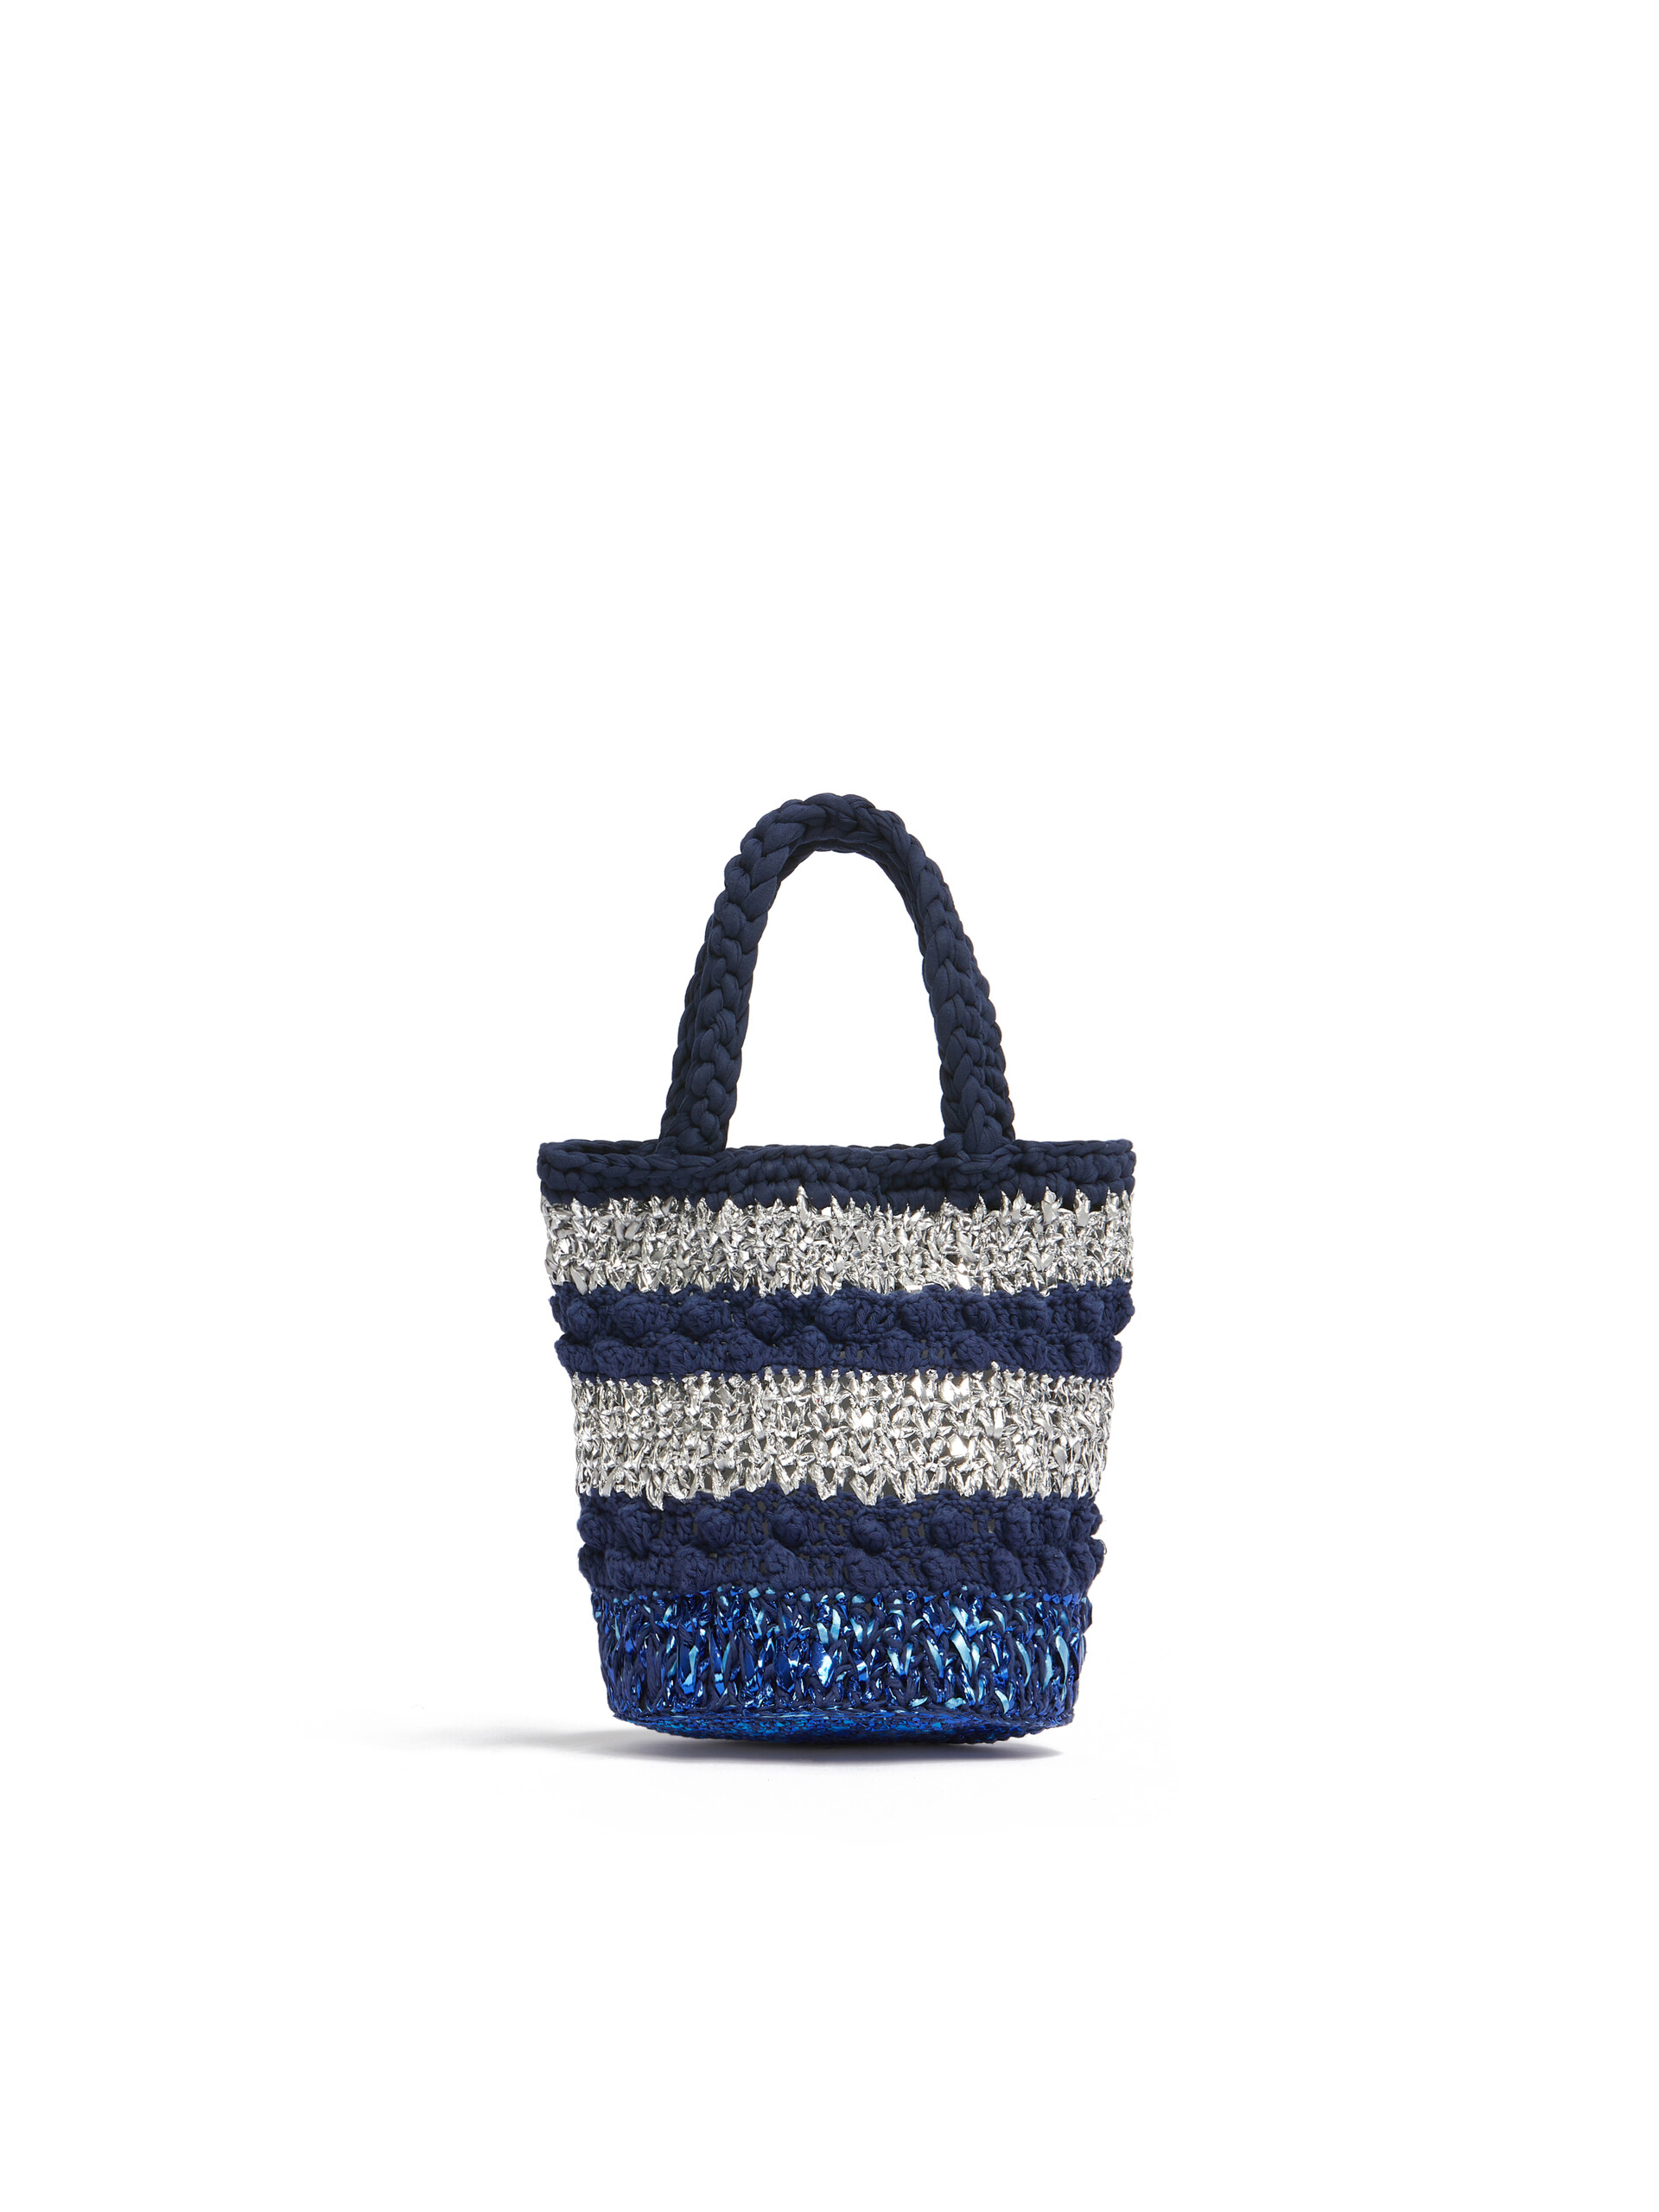 Deep blue and silver bobble-knit MARNI MARKET BUCKET bag - Shopping Bags - Image 3